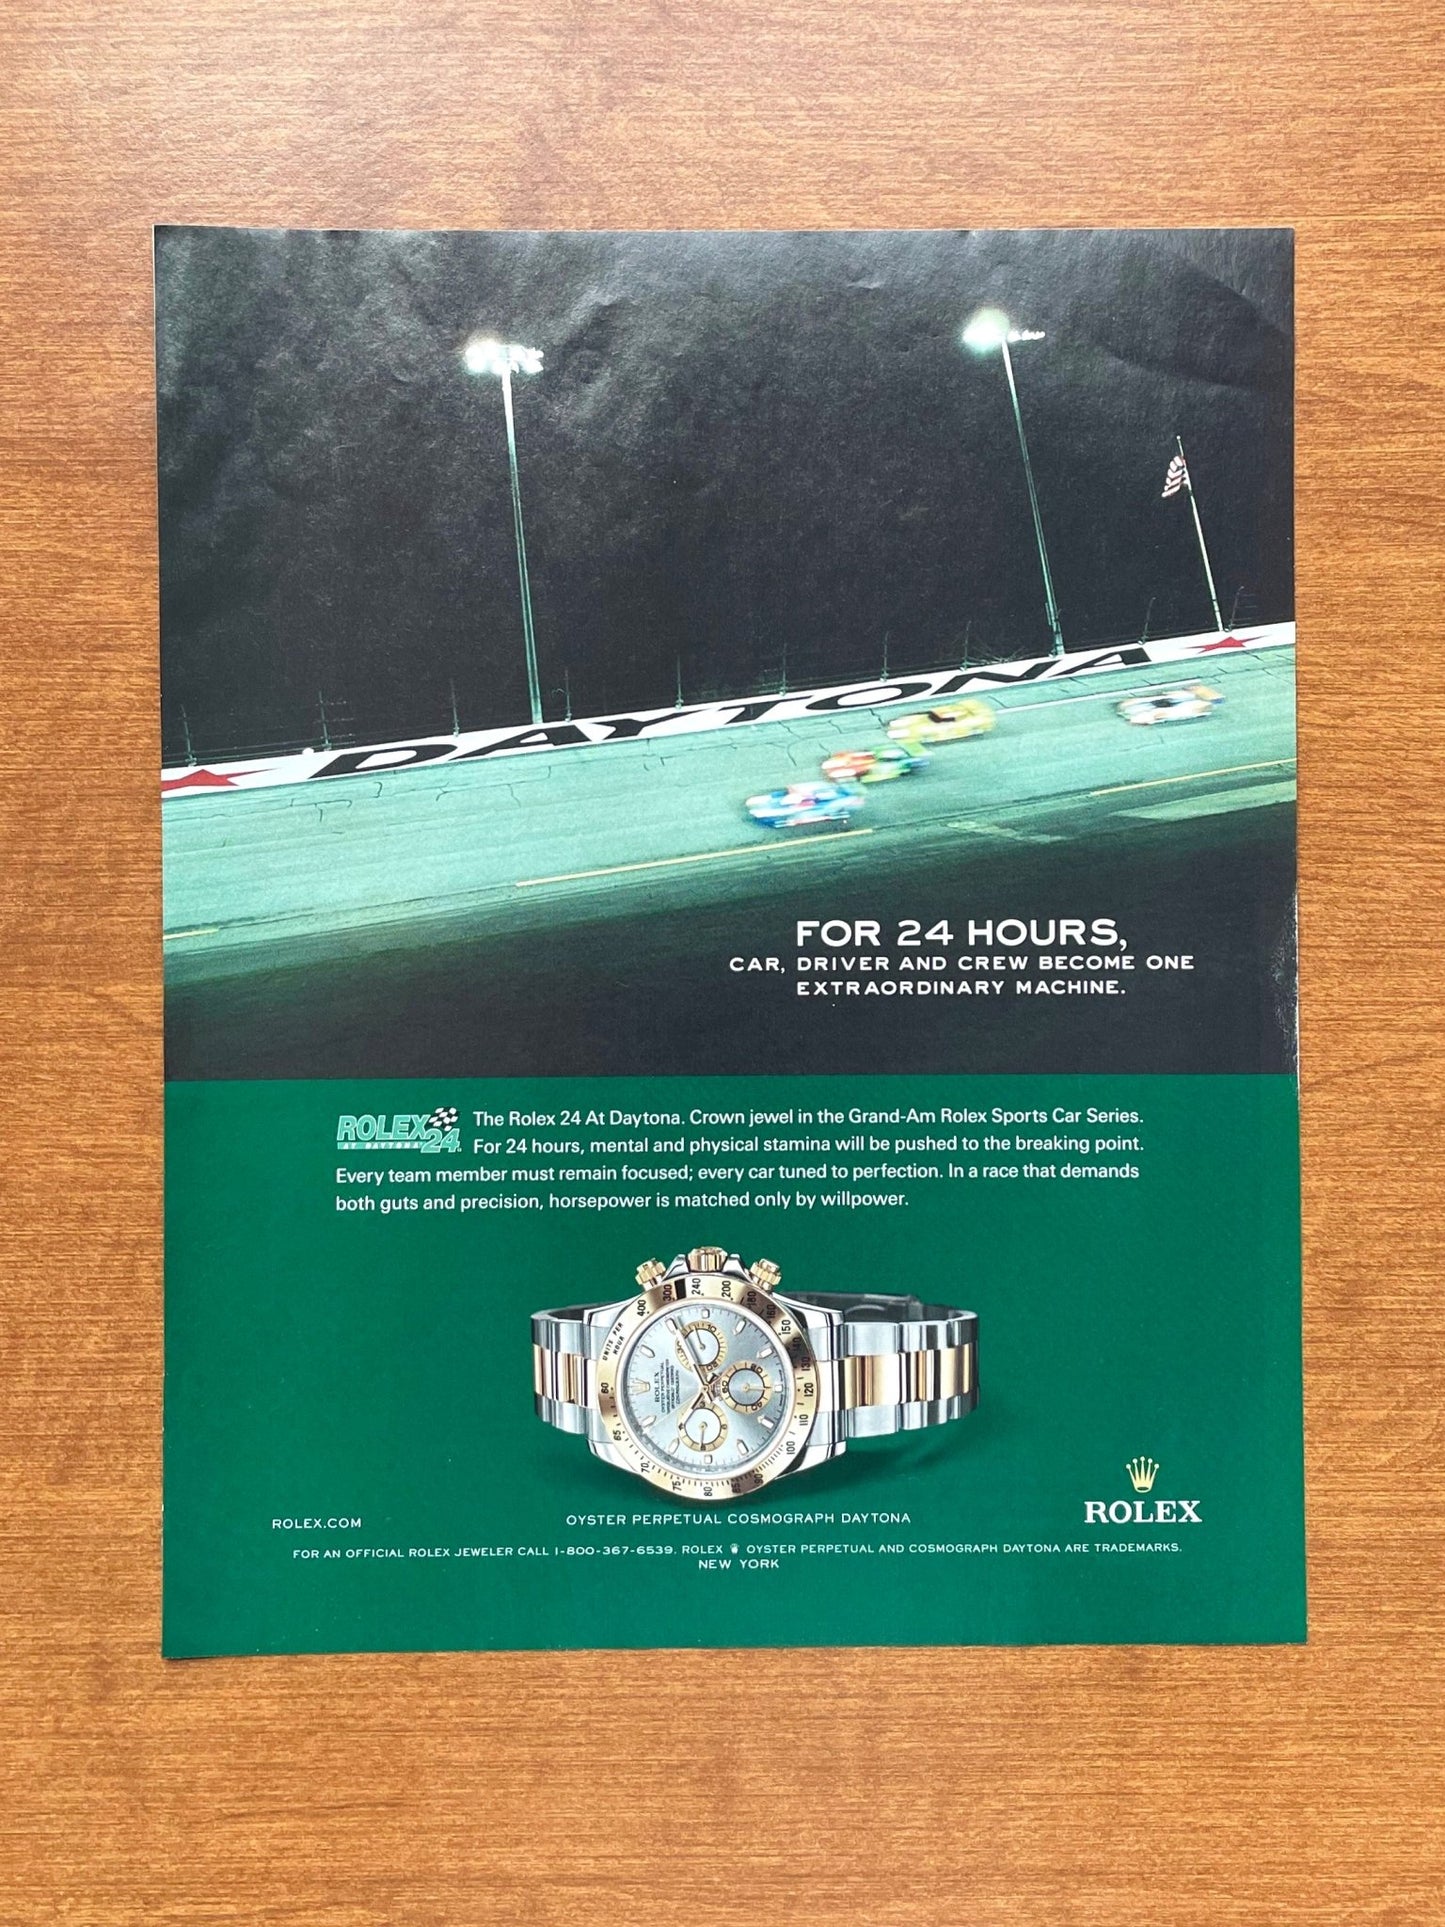 2008 Rolex Daytona Ref. 116523 "For 24 Hours..." Advertisement